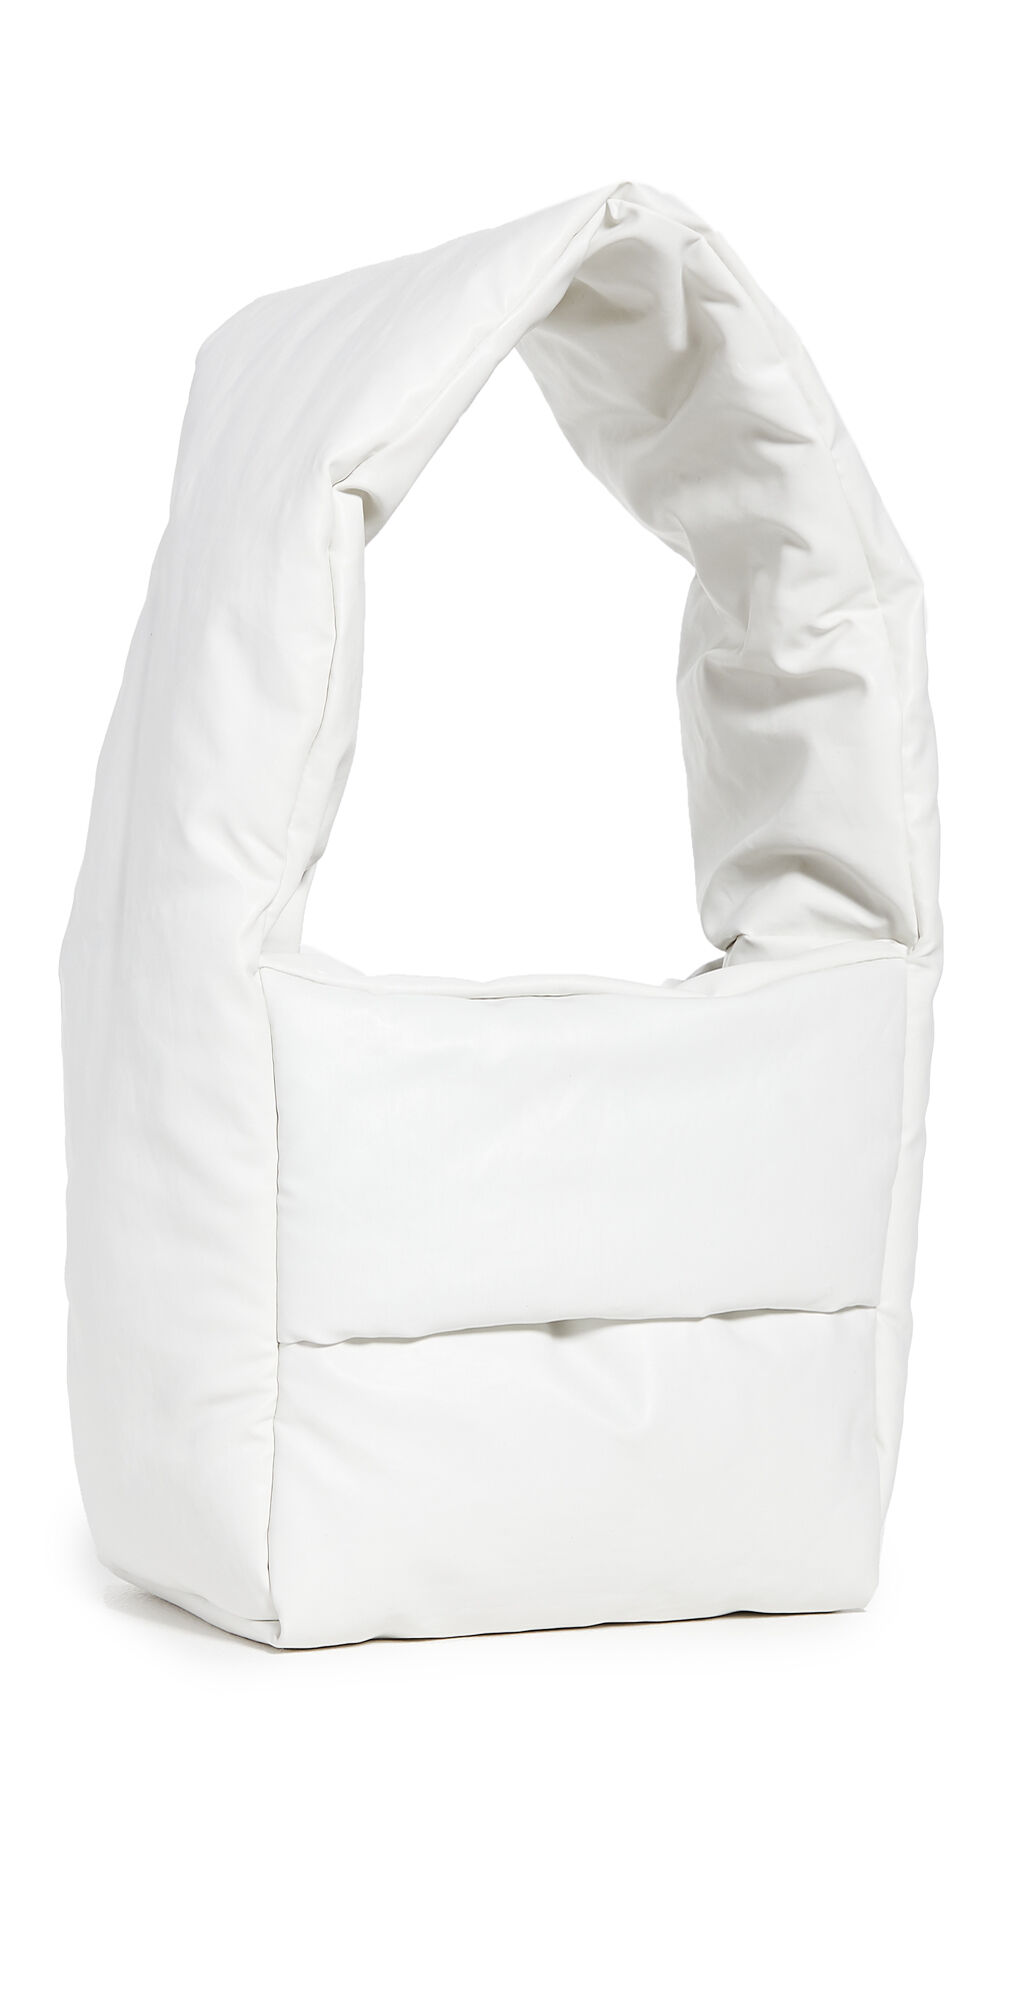 KASSL Monk Small Oil Bag White One Size  White  size:One Size